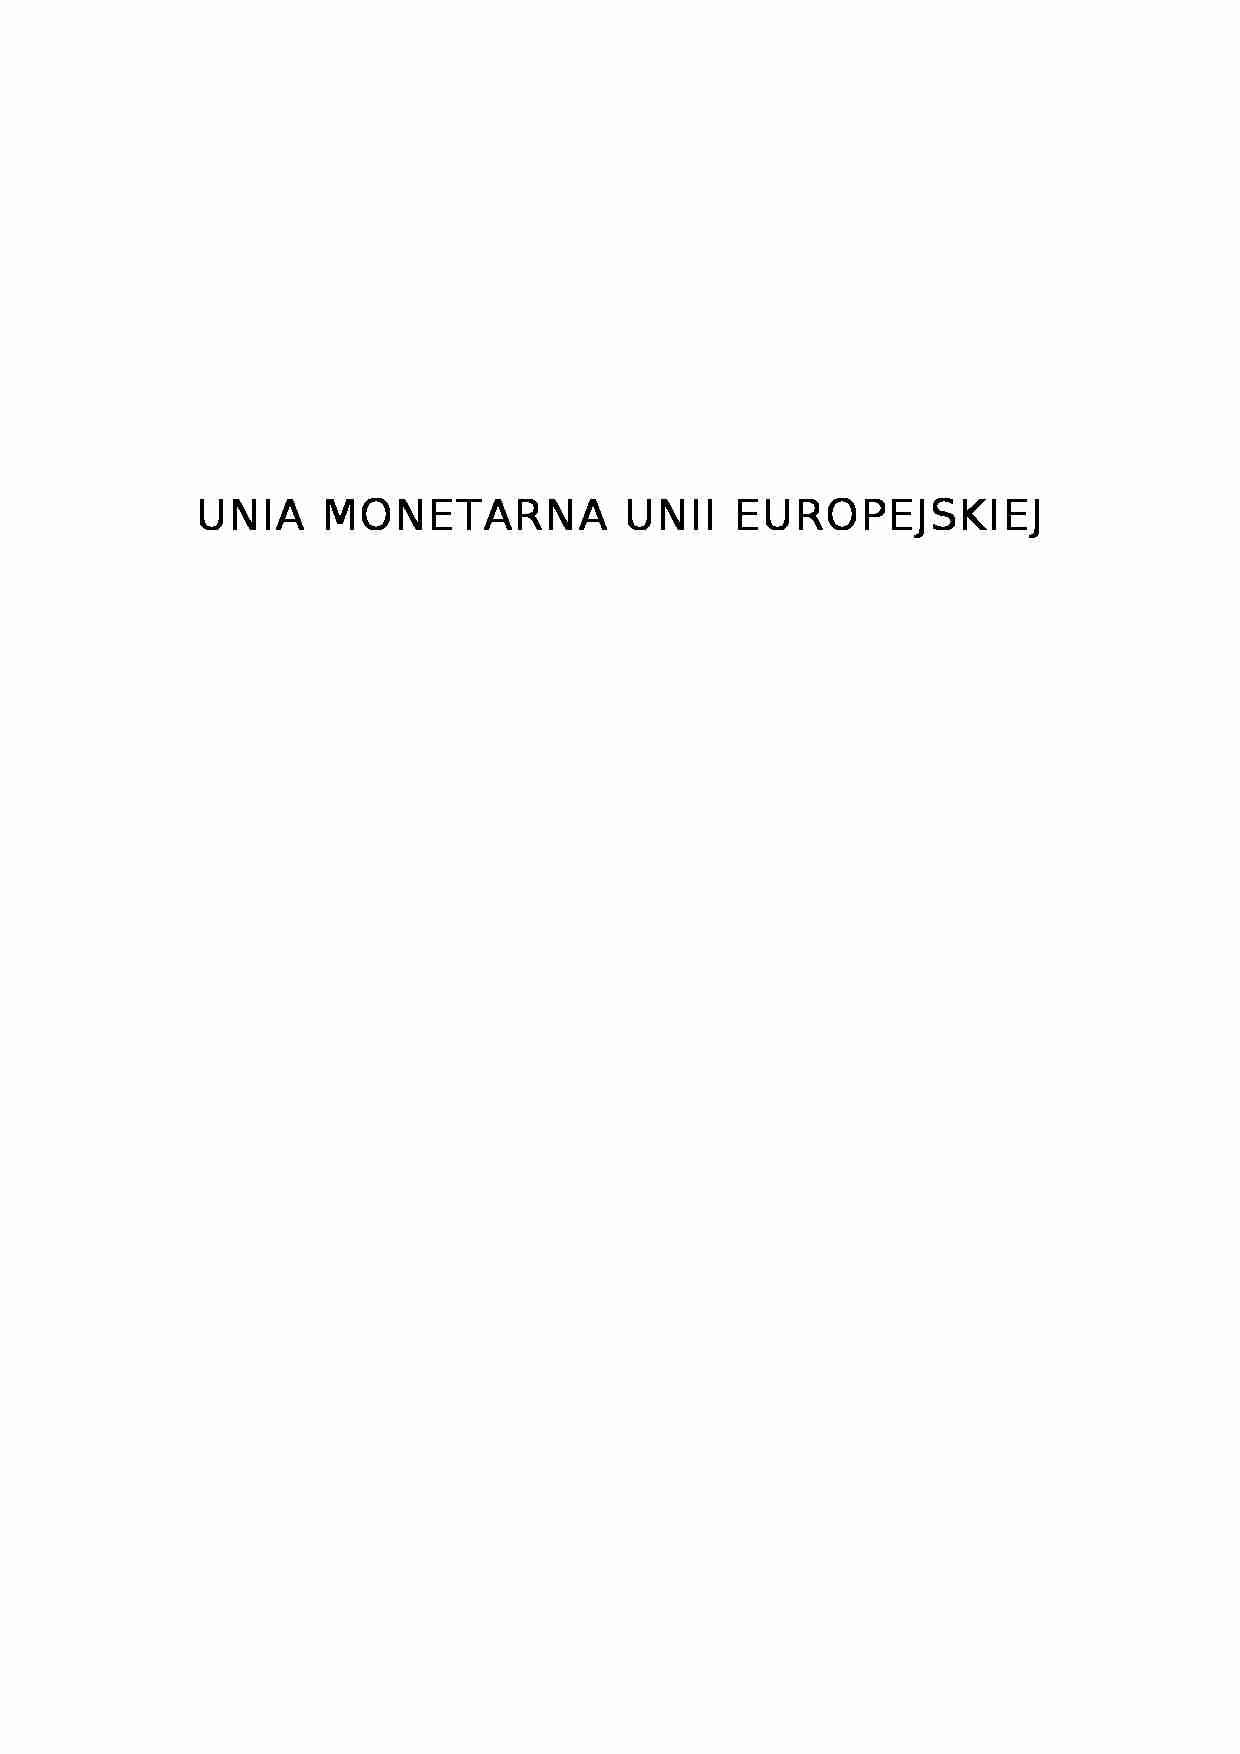 Euro - Unia monetarna Uni Europejskiej - strona 1